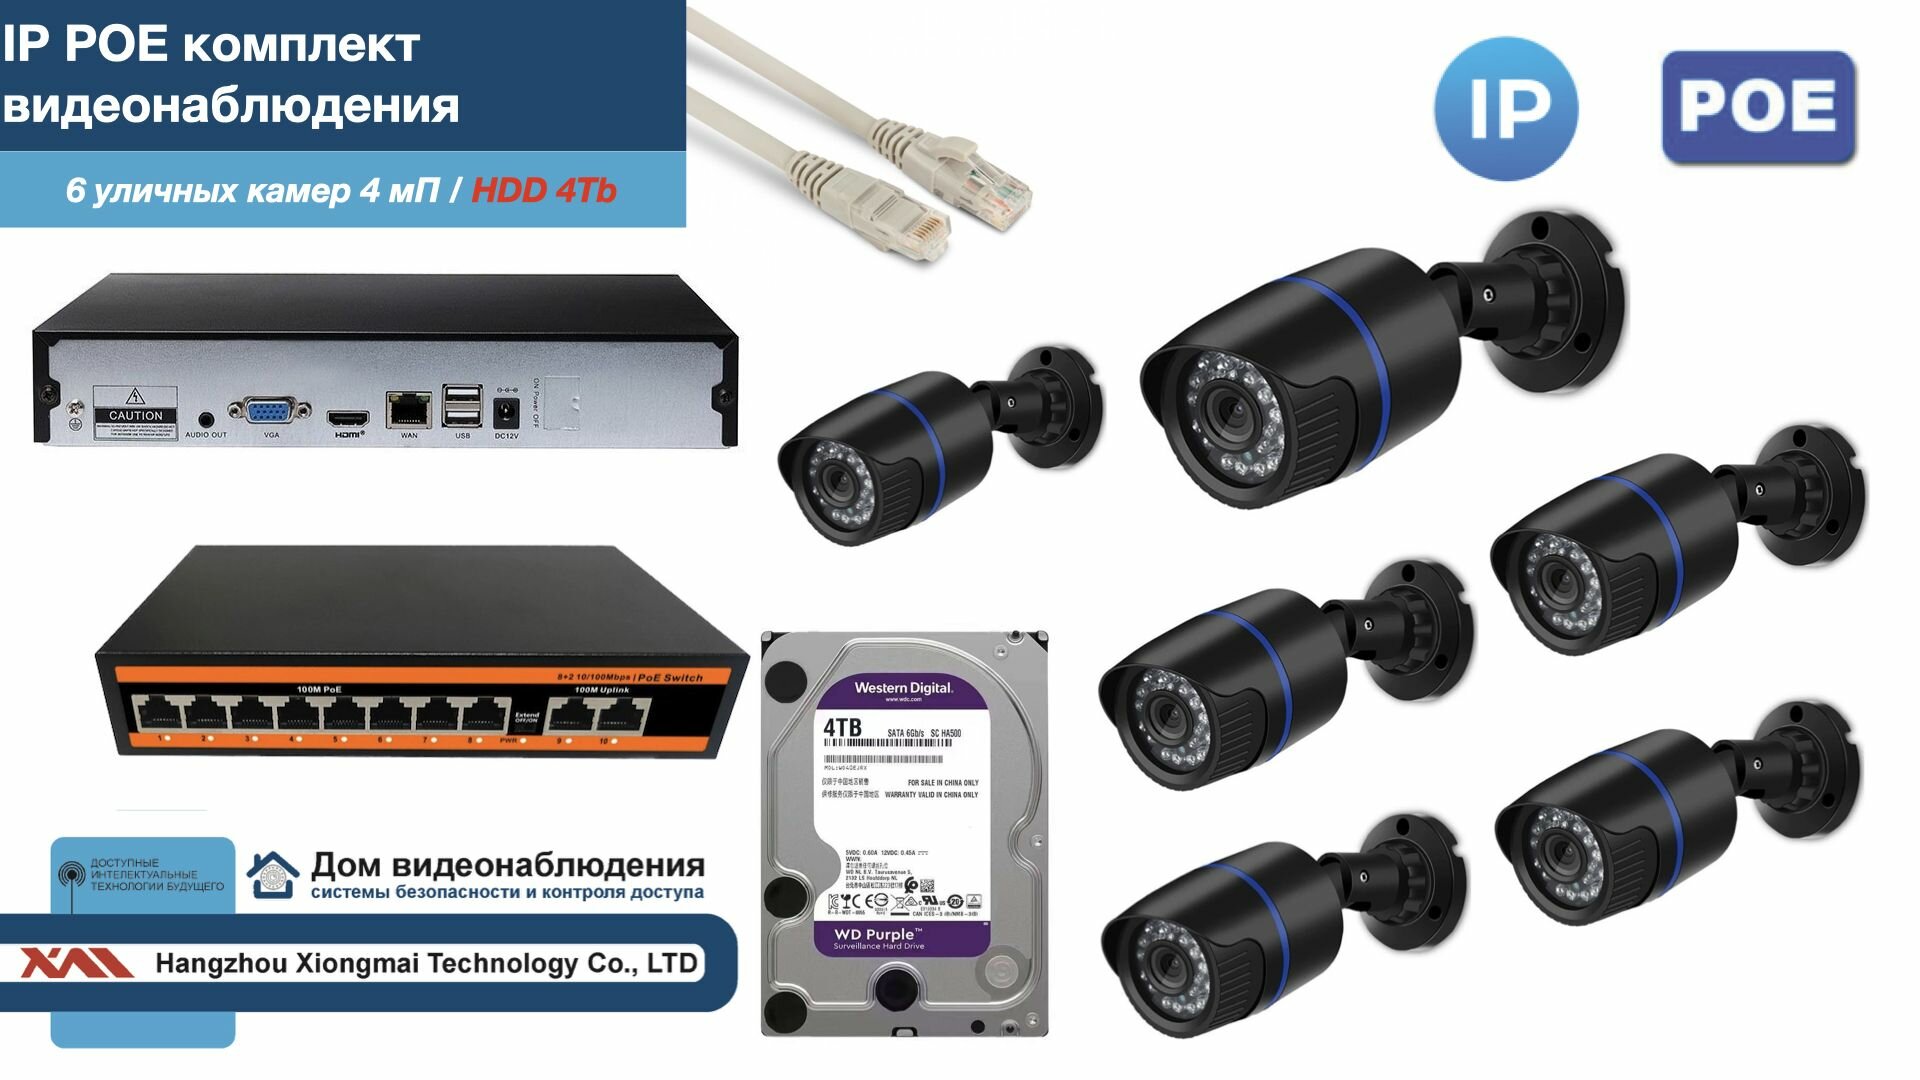 Полный IP POE комплект видеонаблюдения на 6 камер (KIT6IPPOE100B4MP-HDD4Tb)